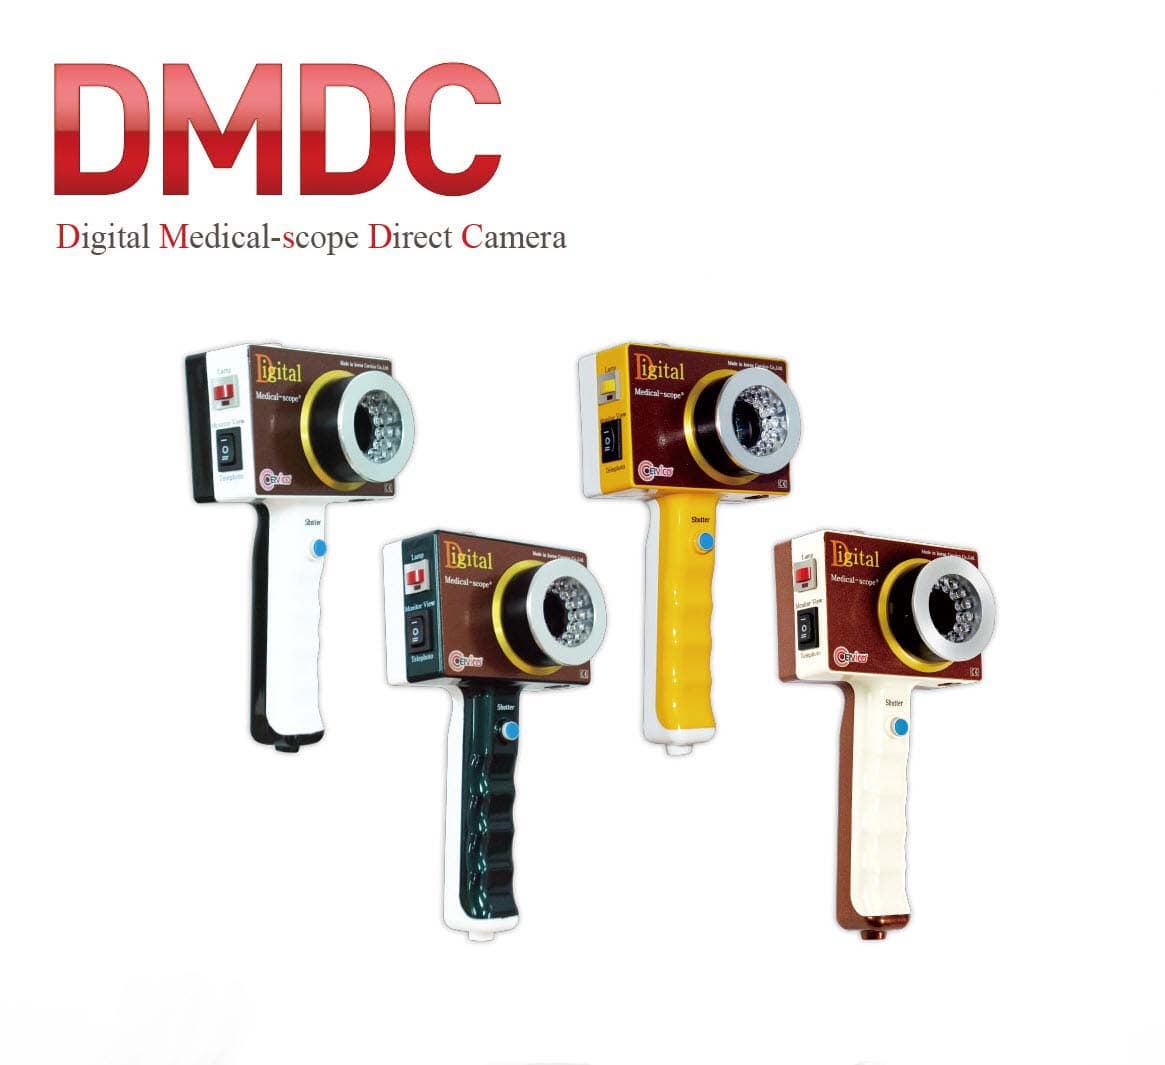 DMDC(Digital Medical-scope Direct Camera)